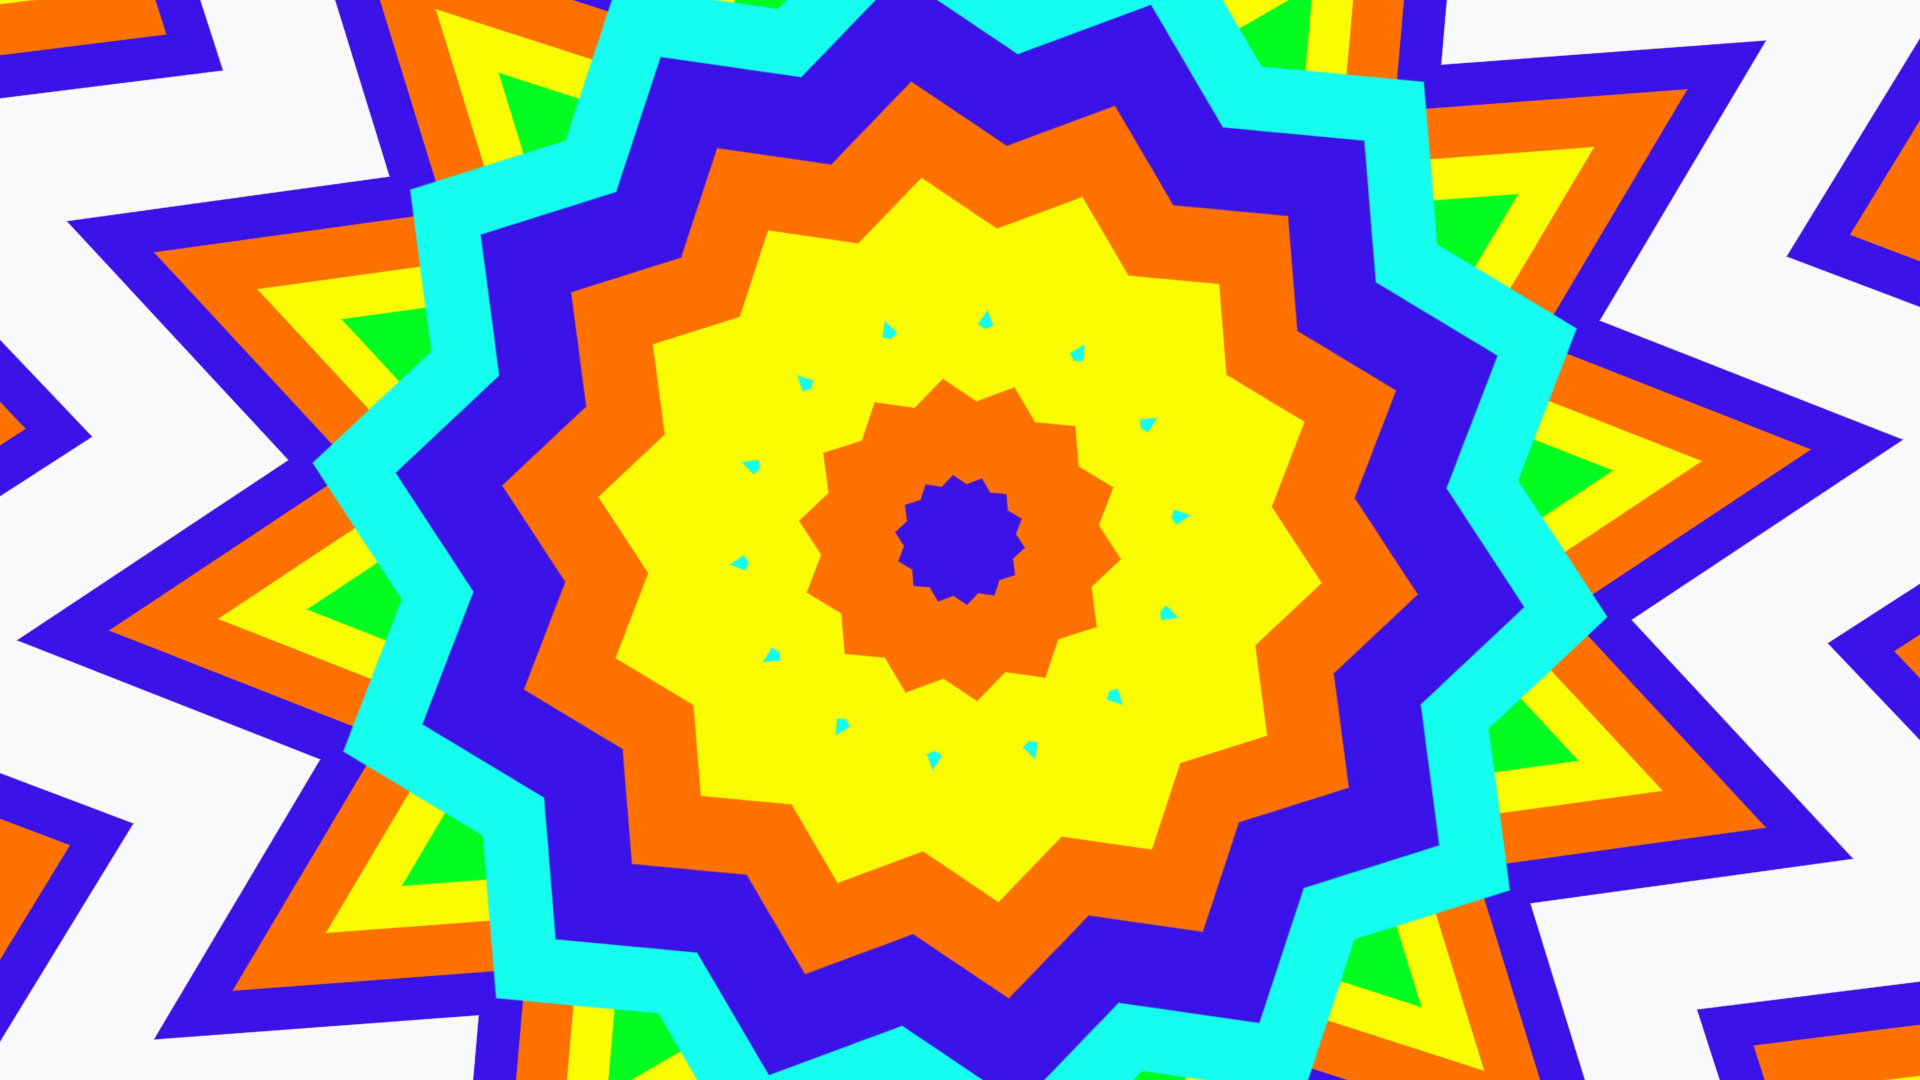 Colorful Digital Art Geometry Shapes 1920x1080